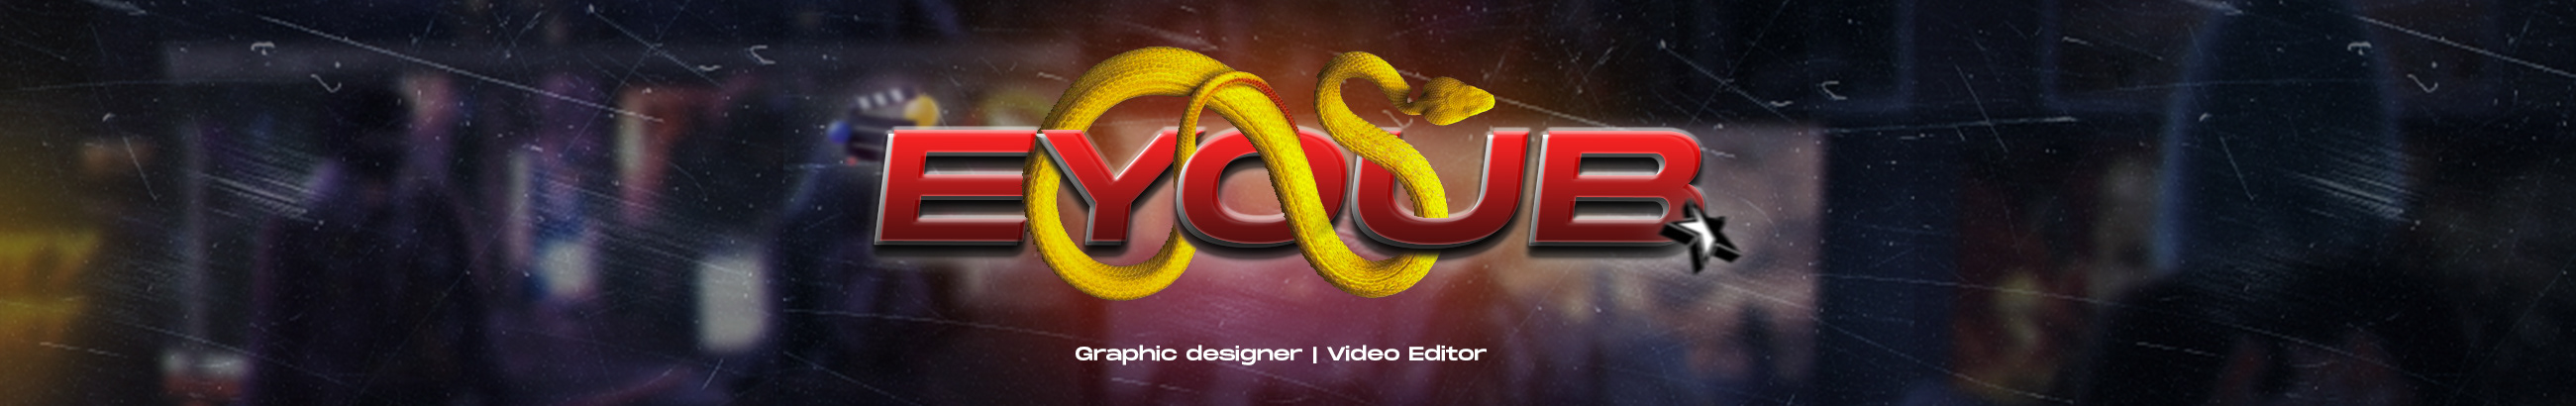 Eyoub Designs profilbanner